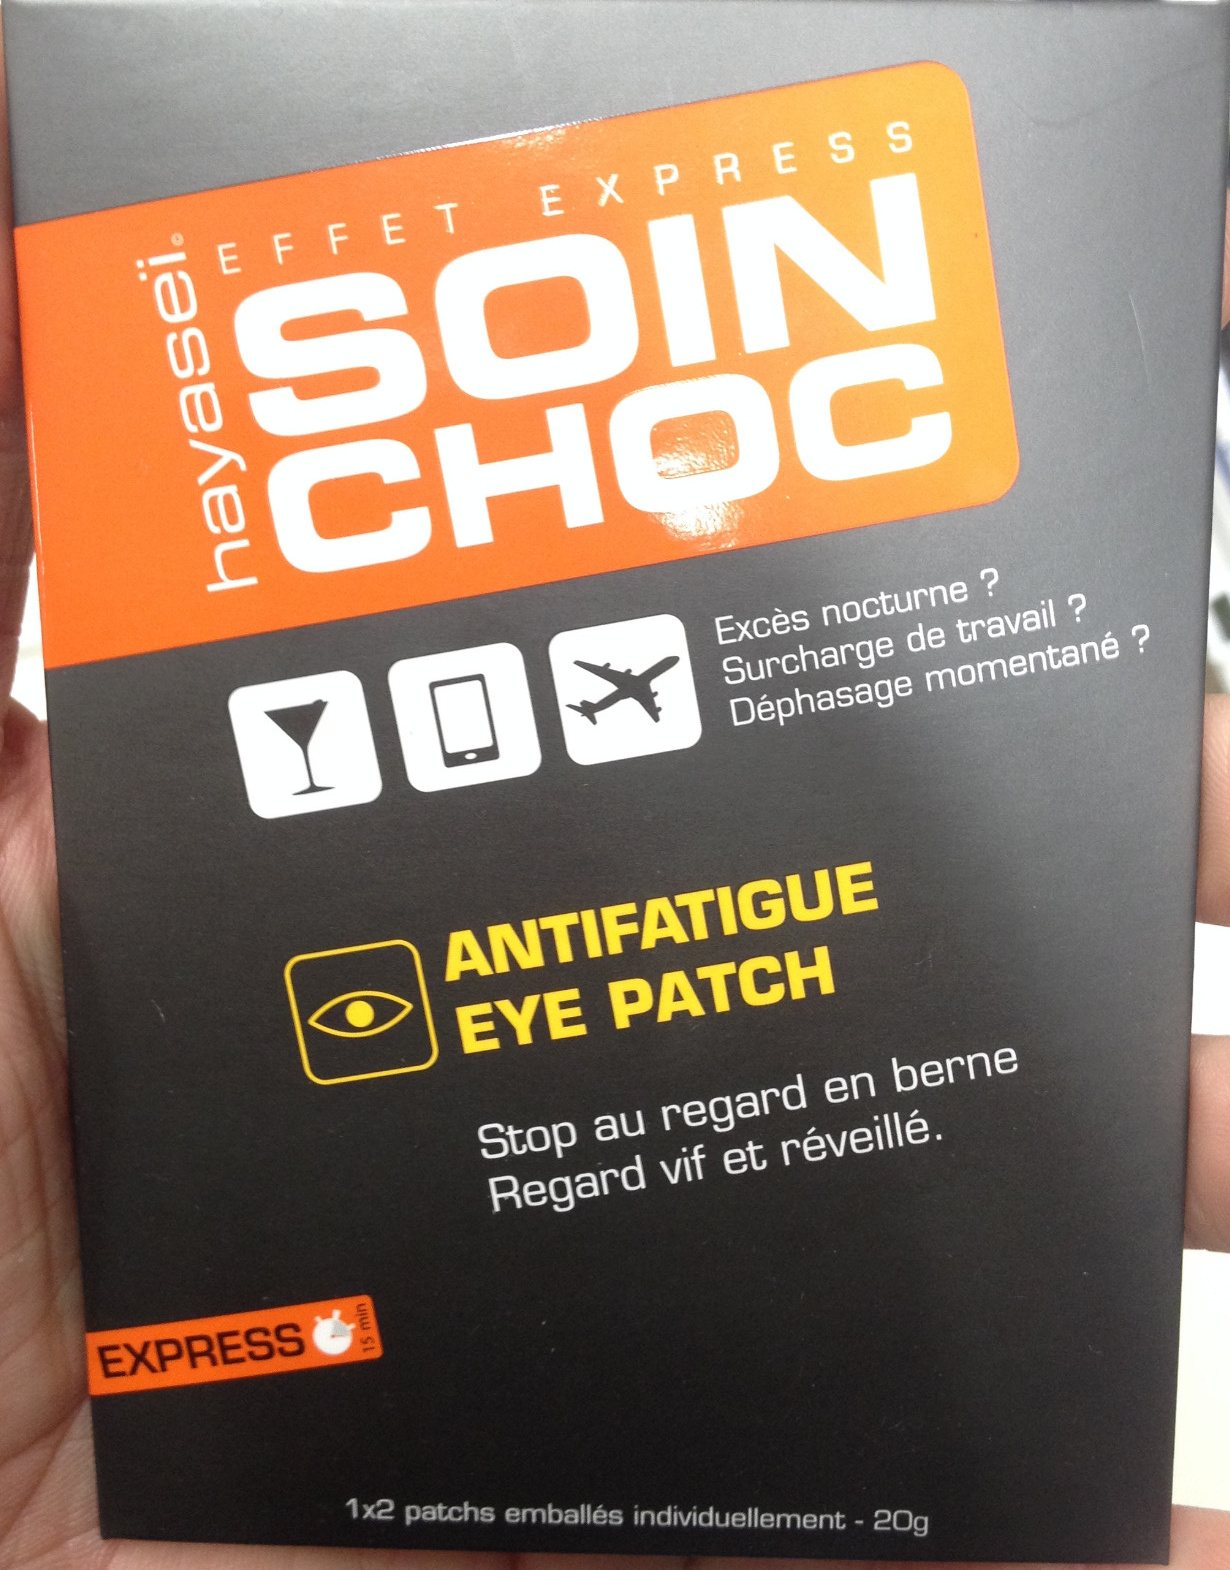 Effet express soin choc antifatigue eye patch - Product - fr